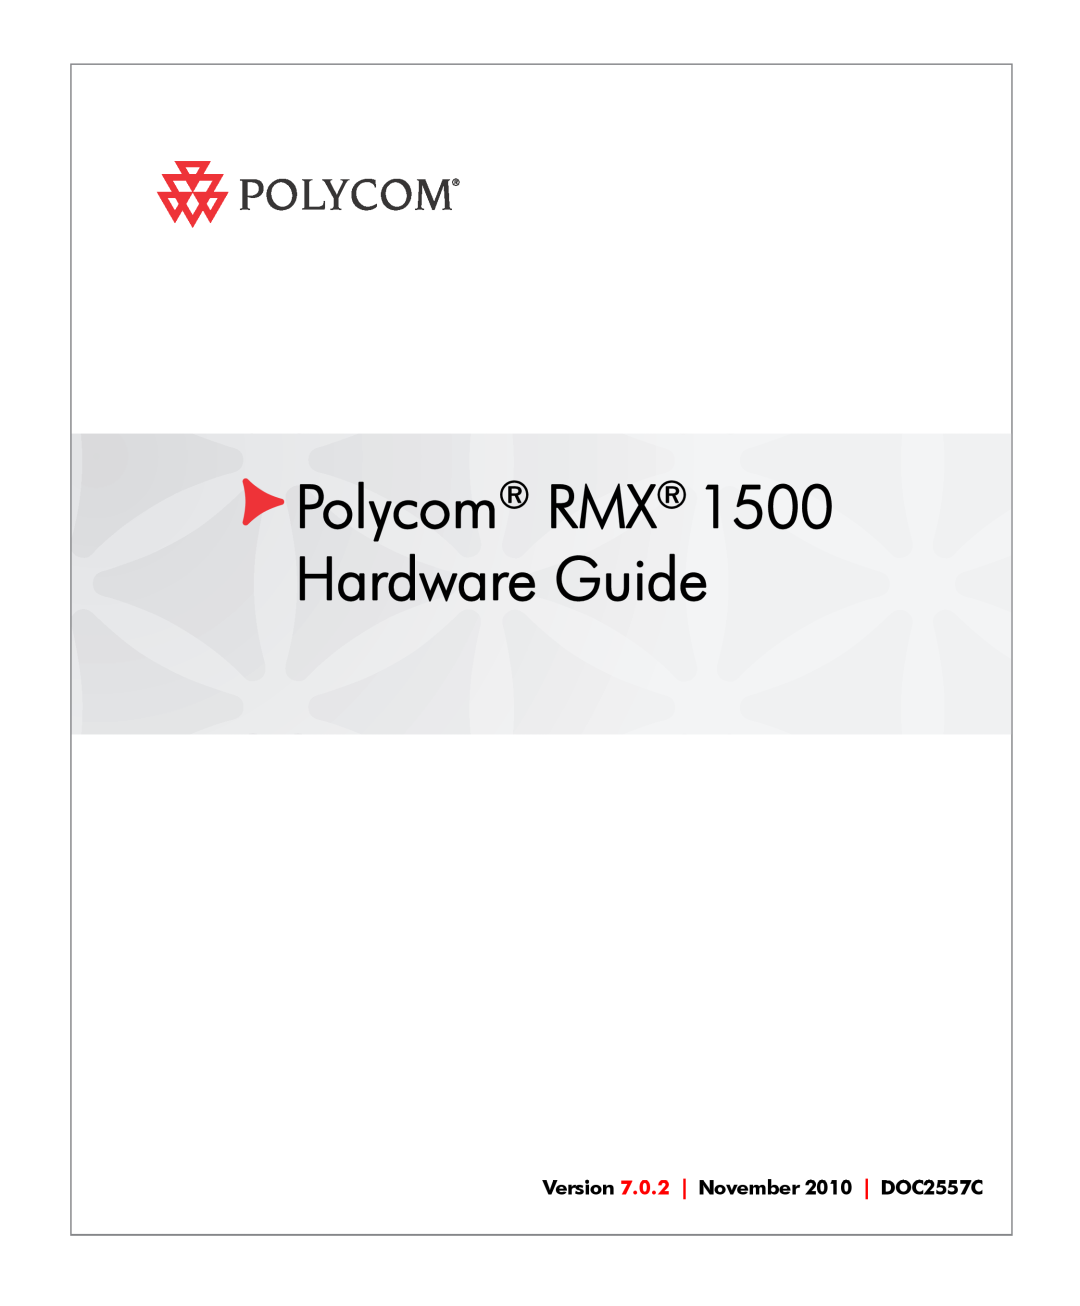 Polycom manual Version 7.0.2 November 2010 DOC2557C, Polycom RMX 1500 Hardware Guide 